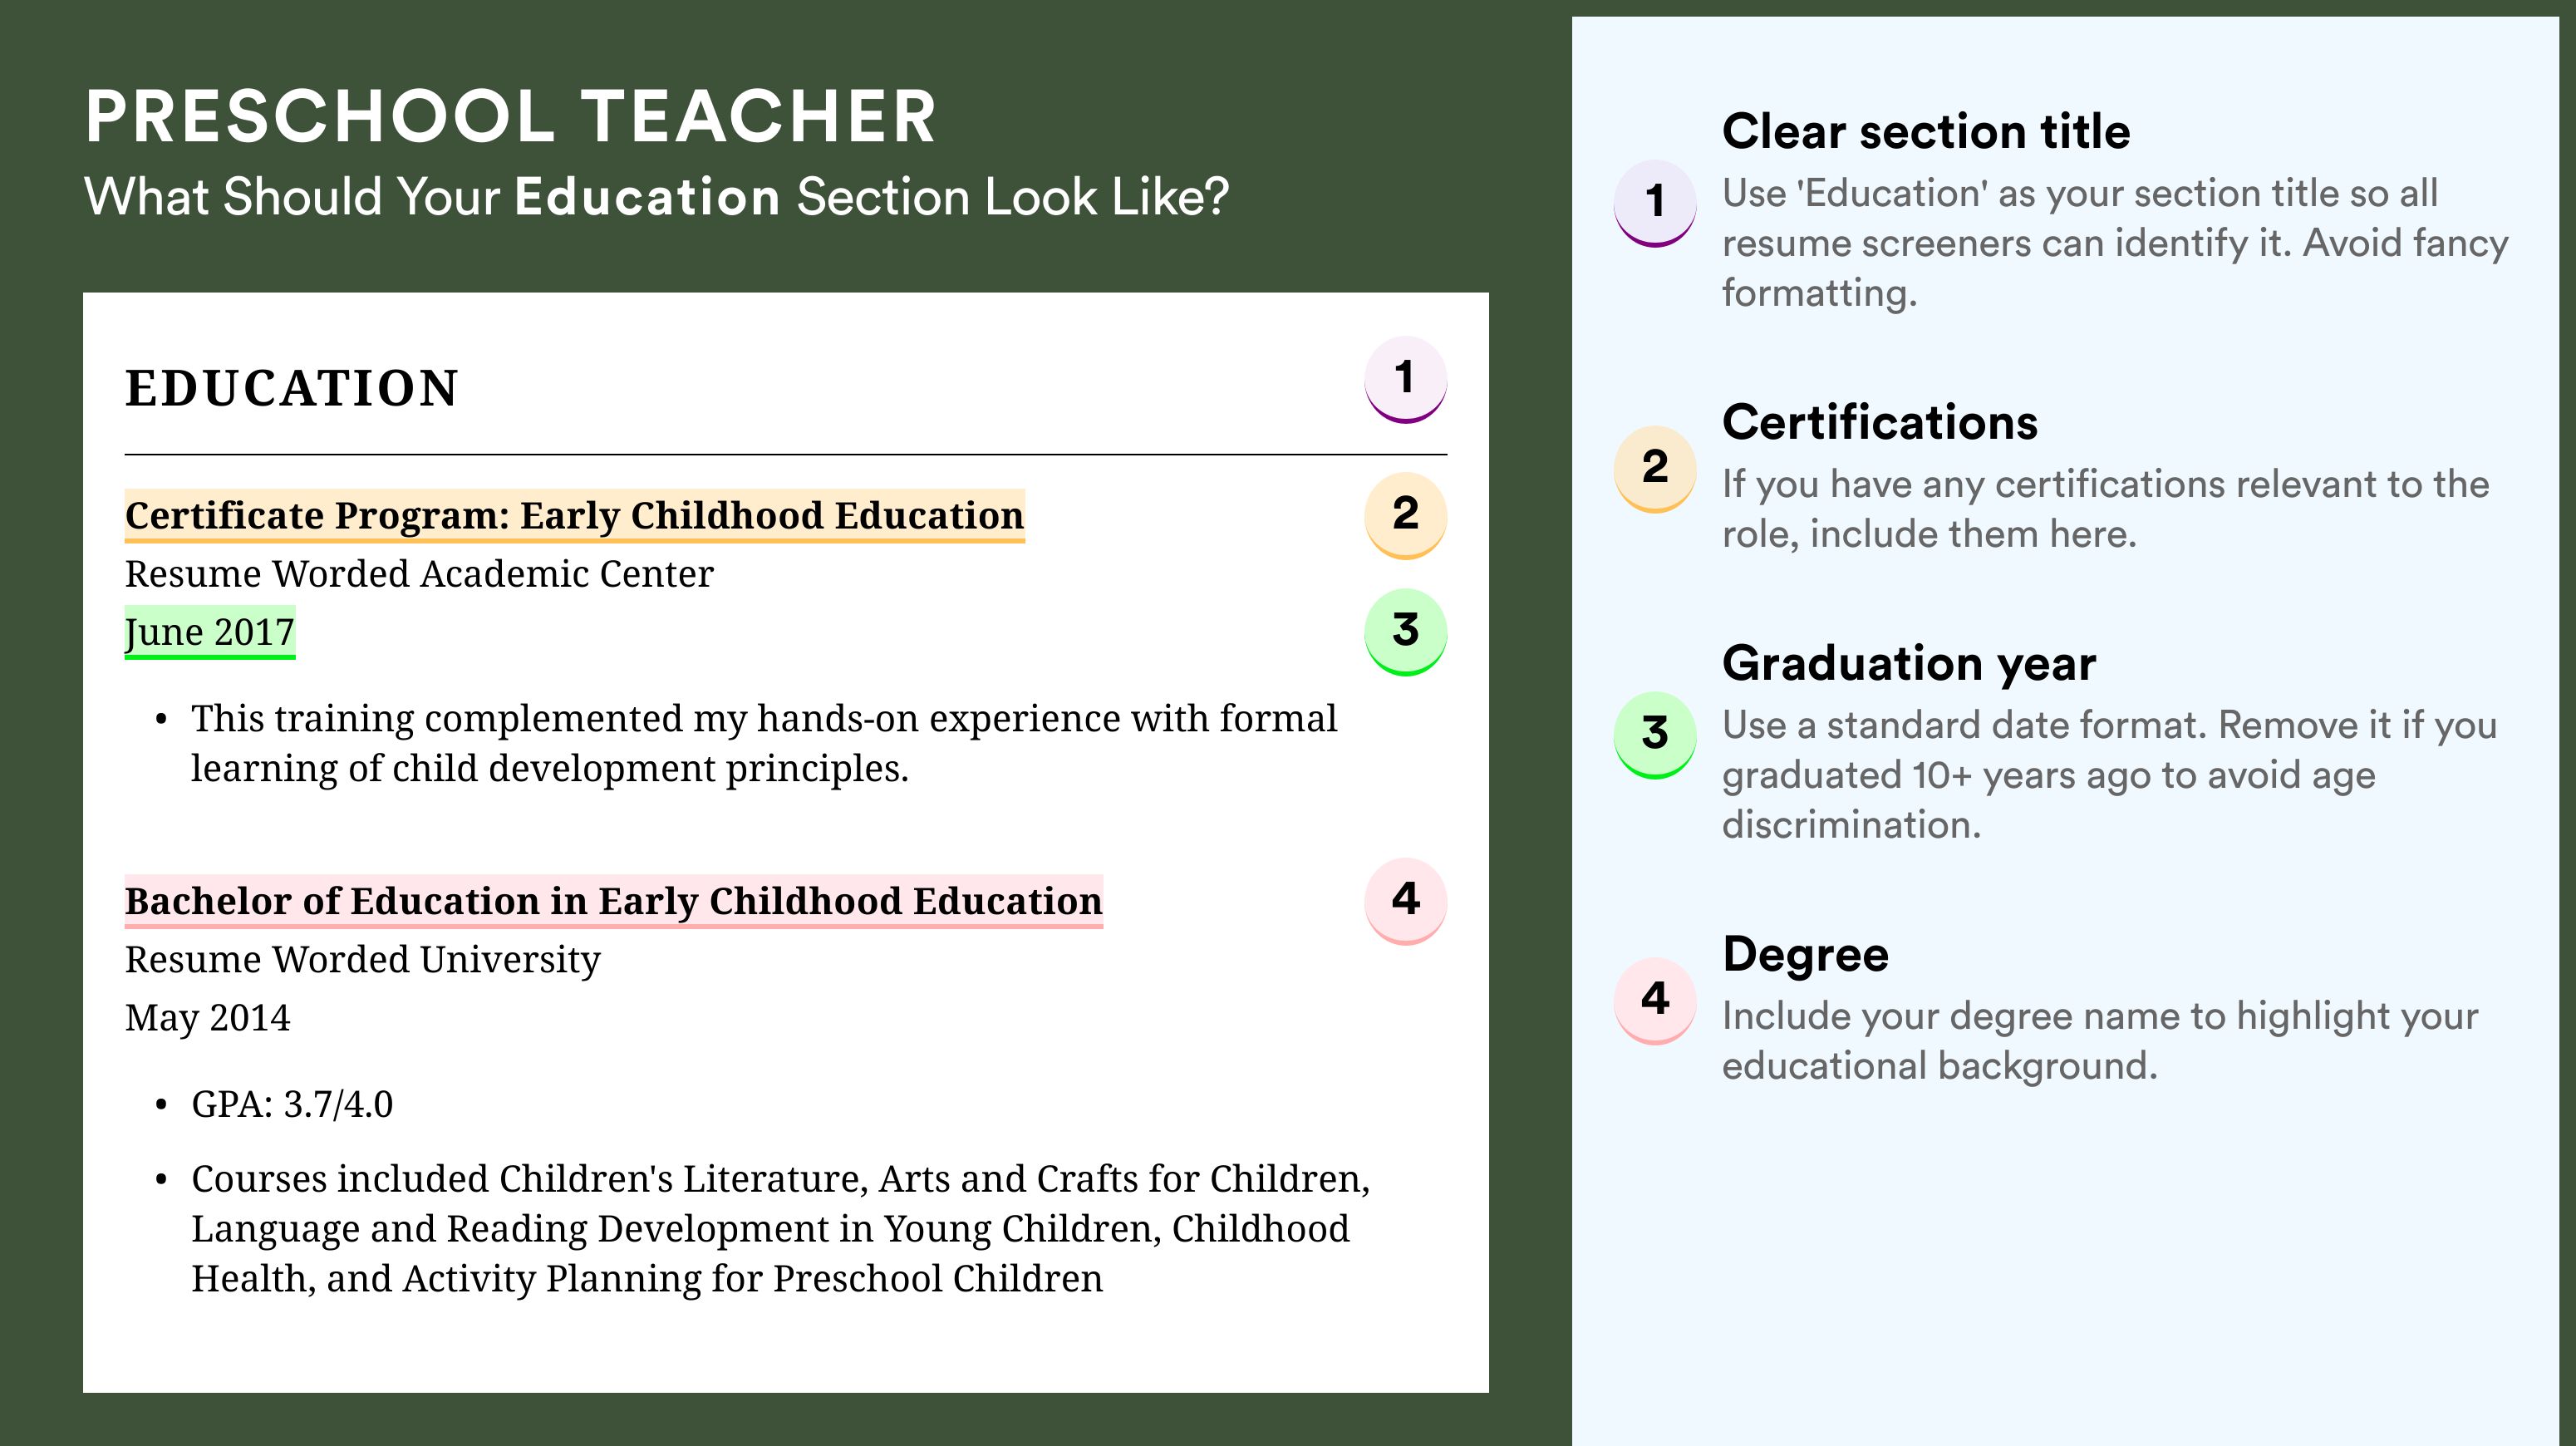 How To Write An Education Section - Preschool Teacher Roles